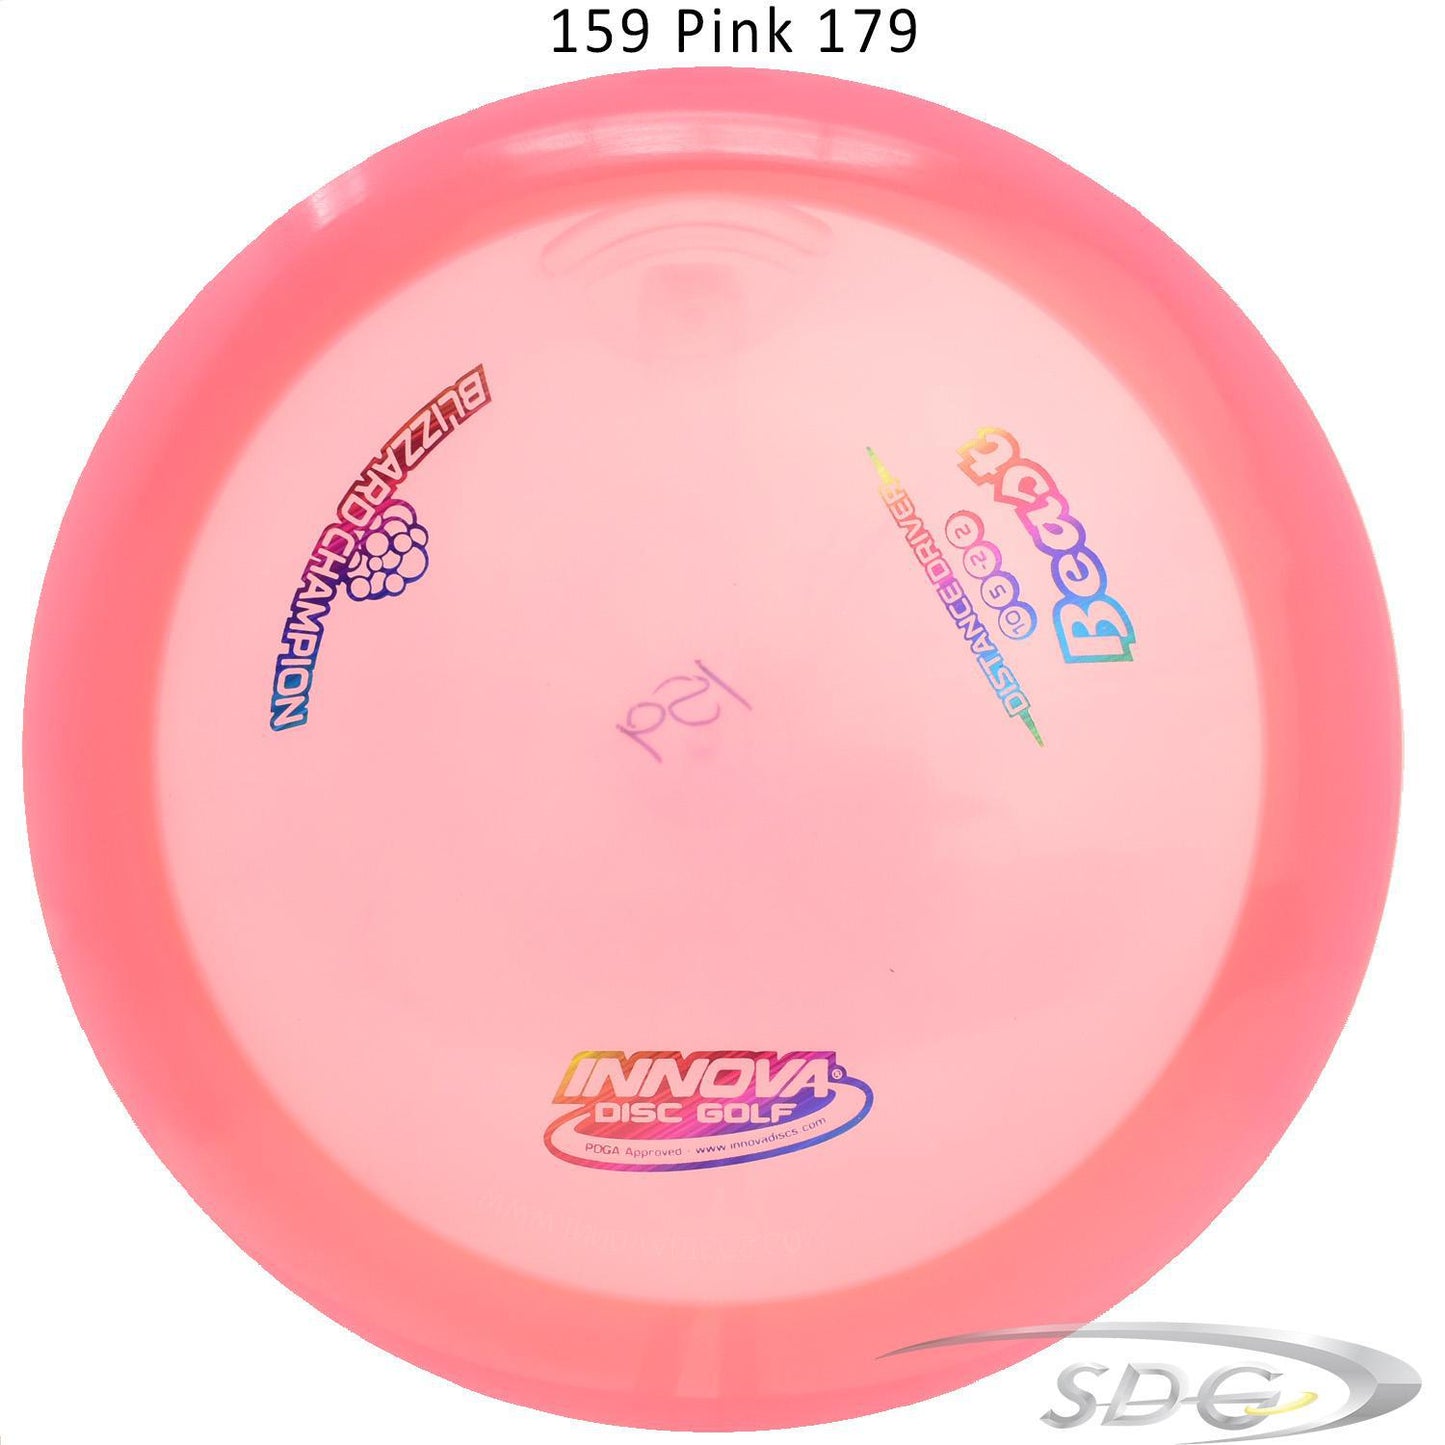 innova-blizzard-champion-beast-disc-golf-distance-driver 159 Pink 179